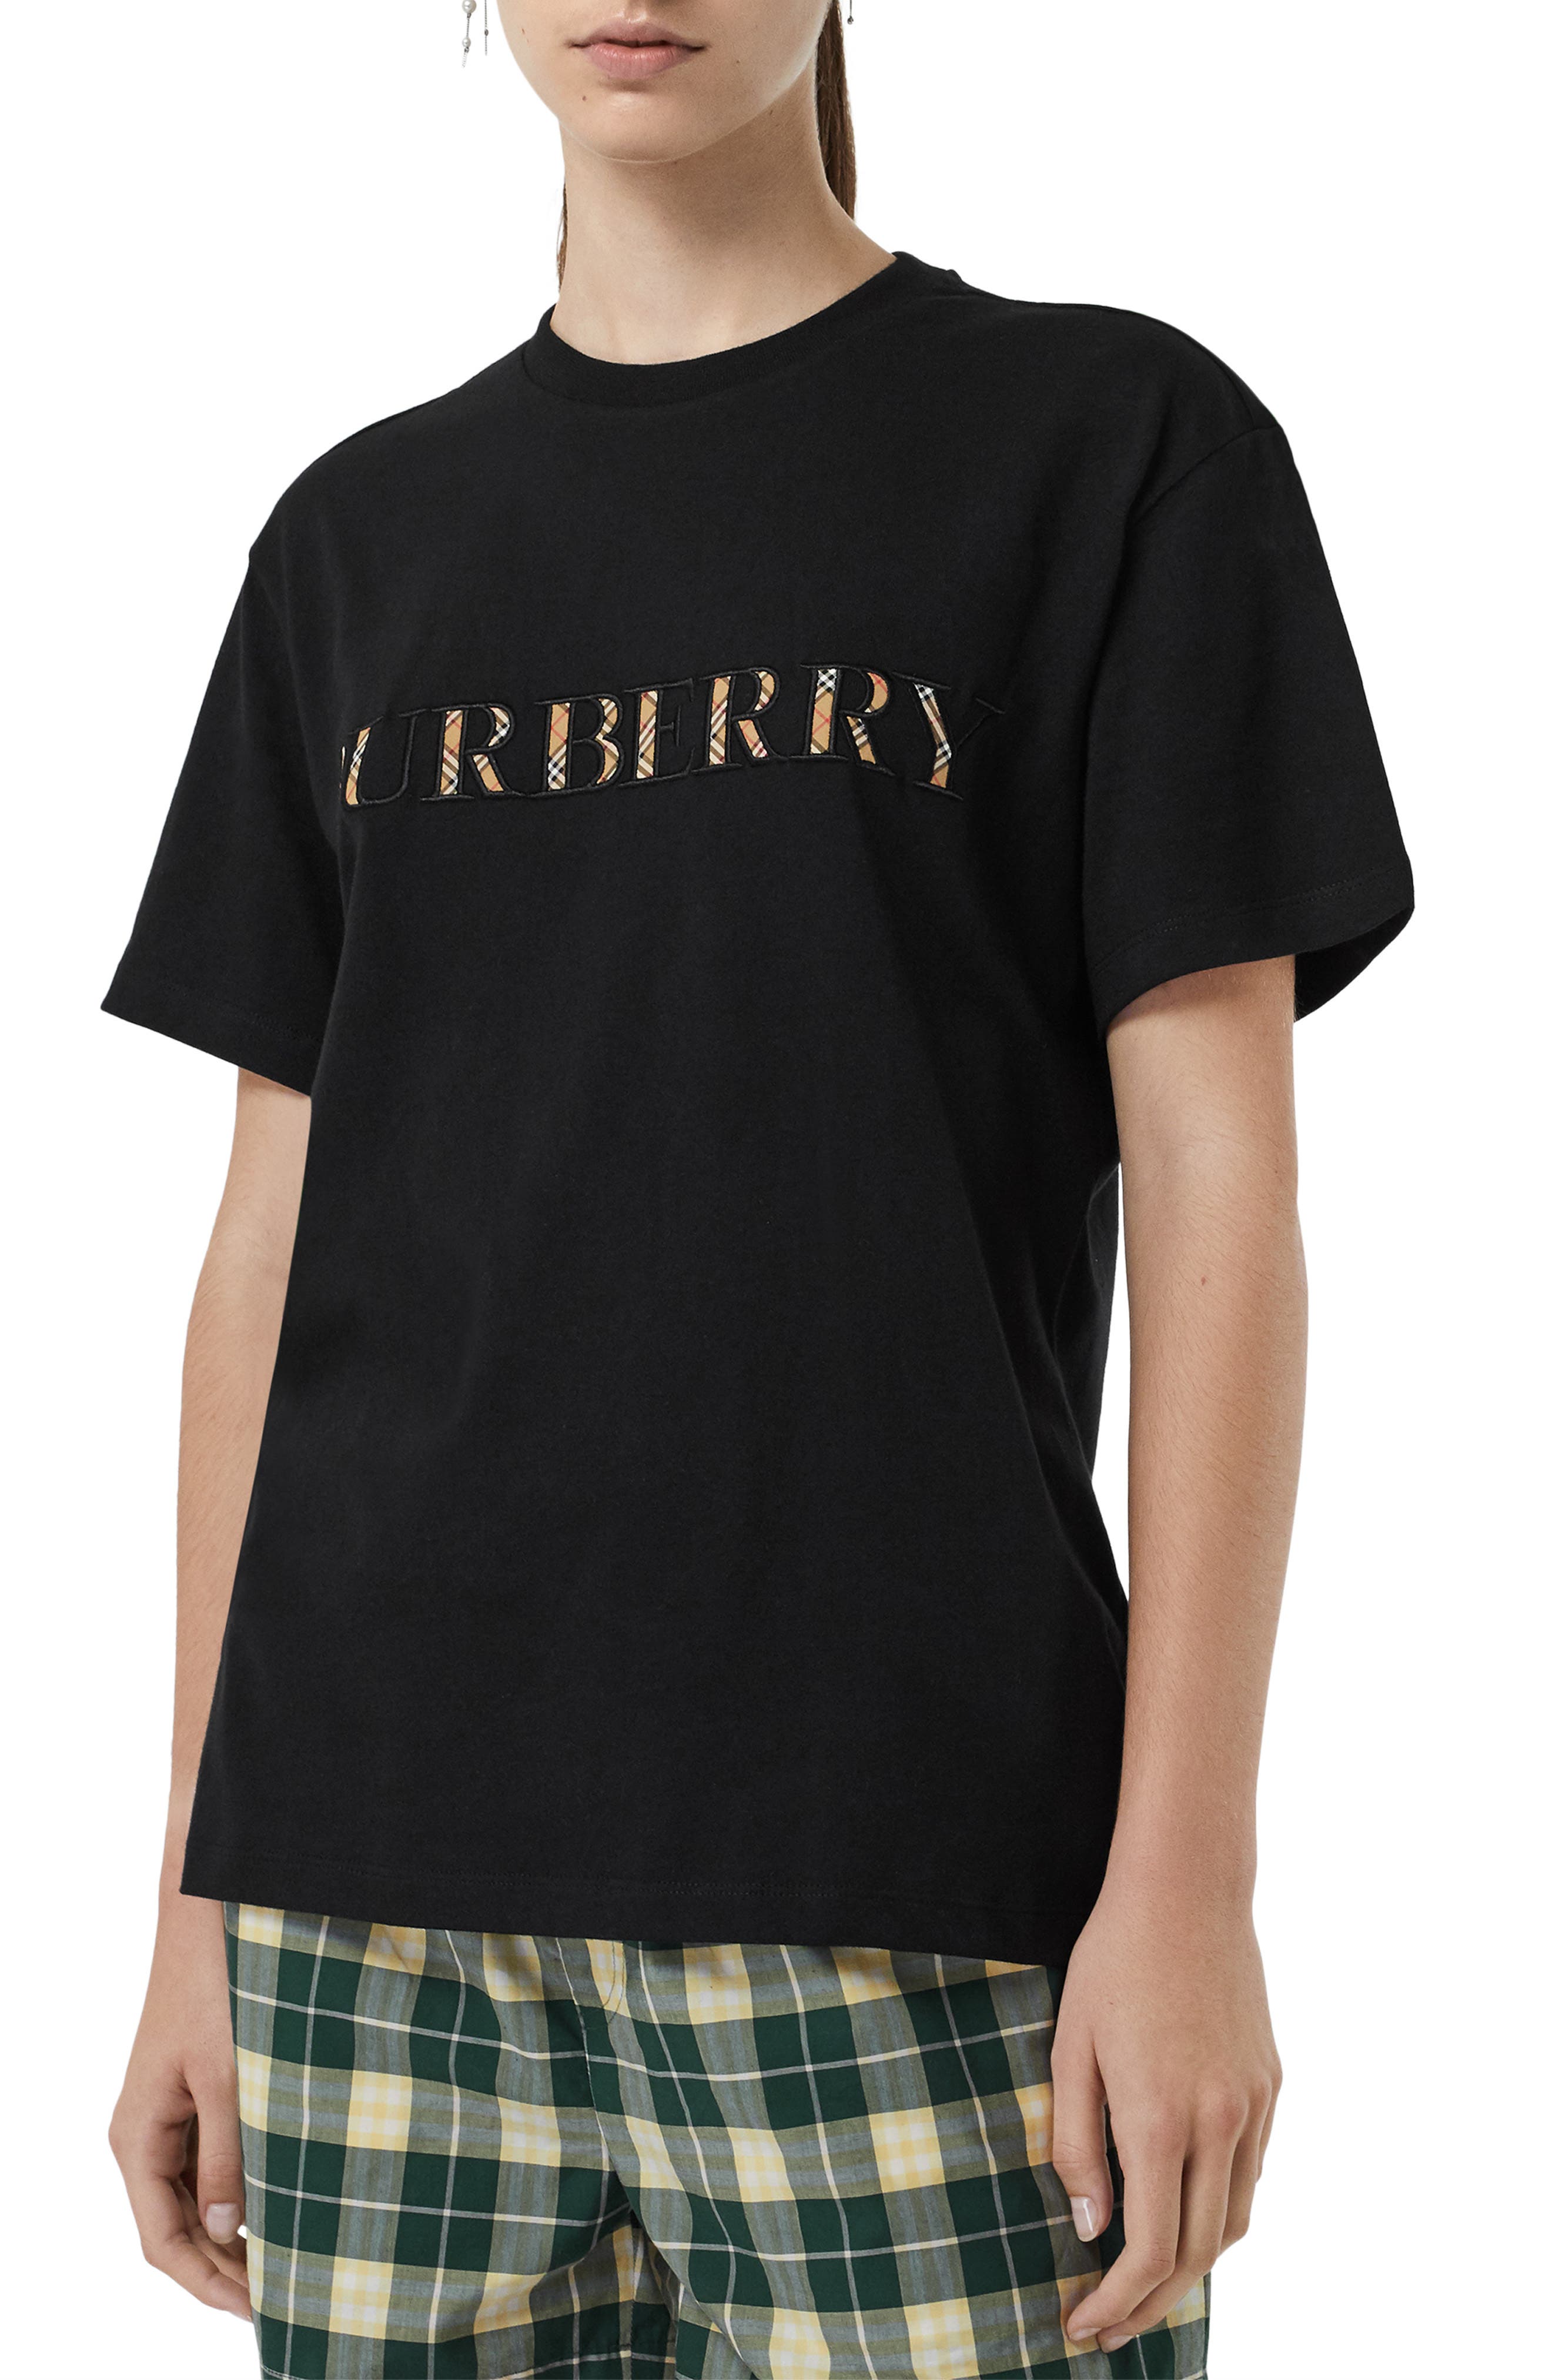 burberry shirt womens nordstrom